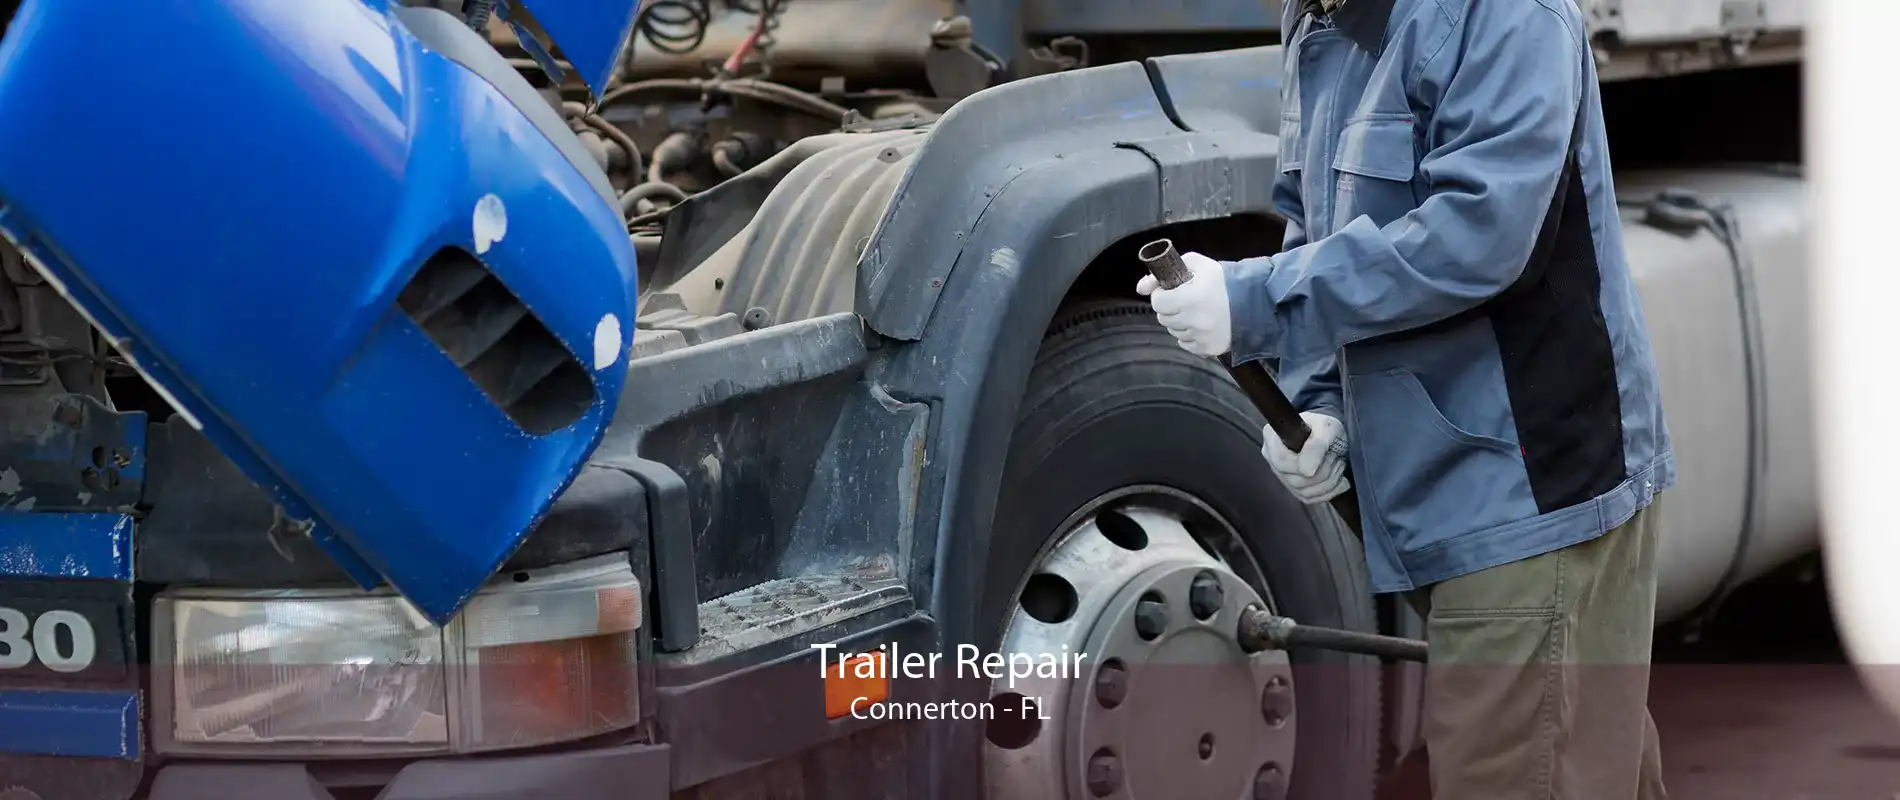 Trailer Repair Connerton - FL